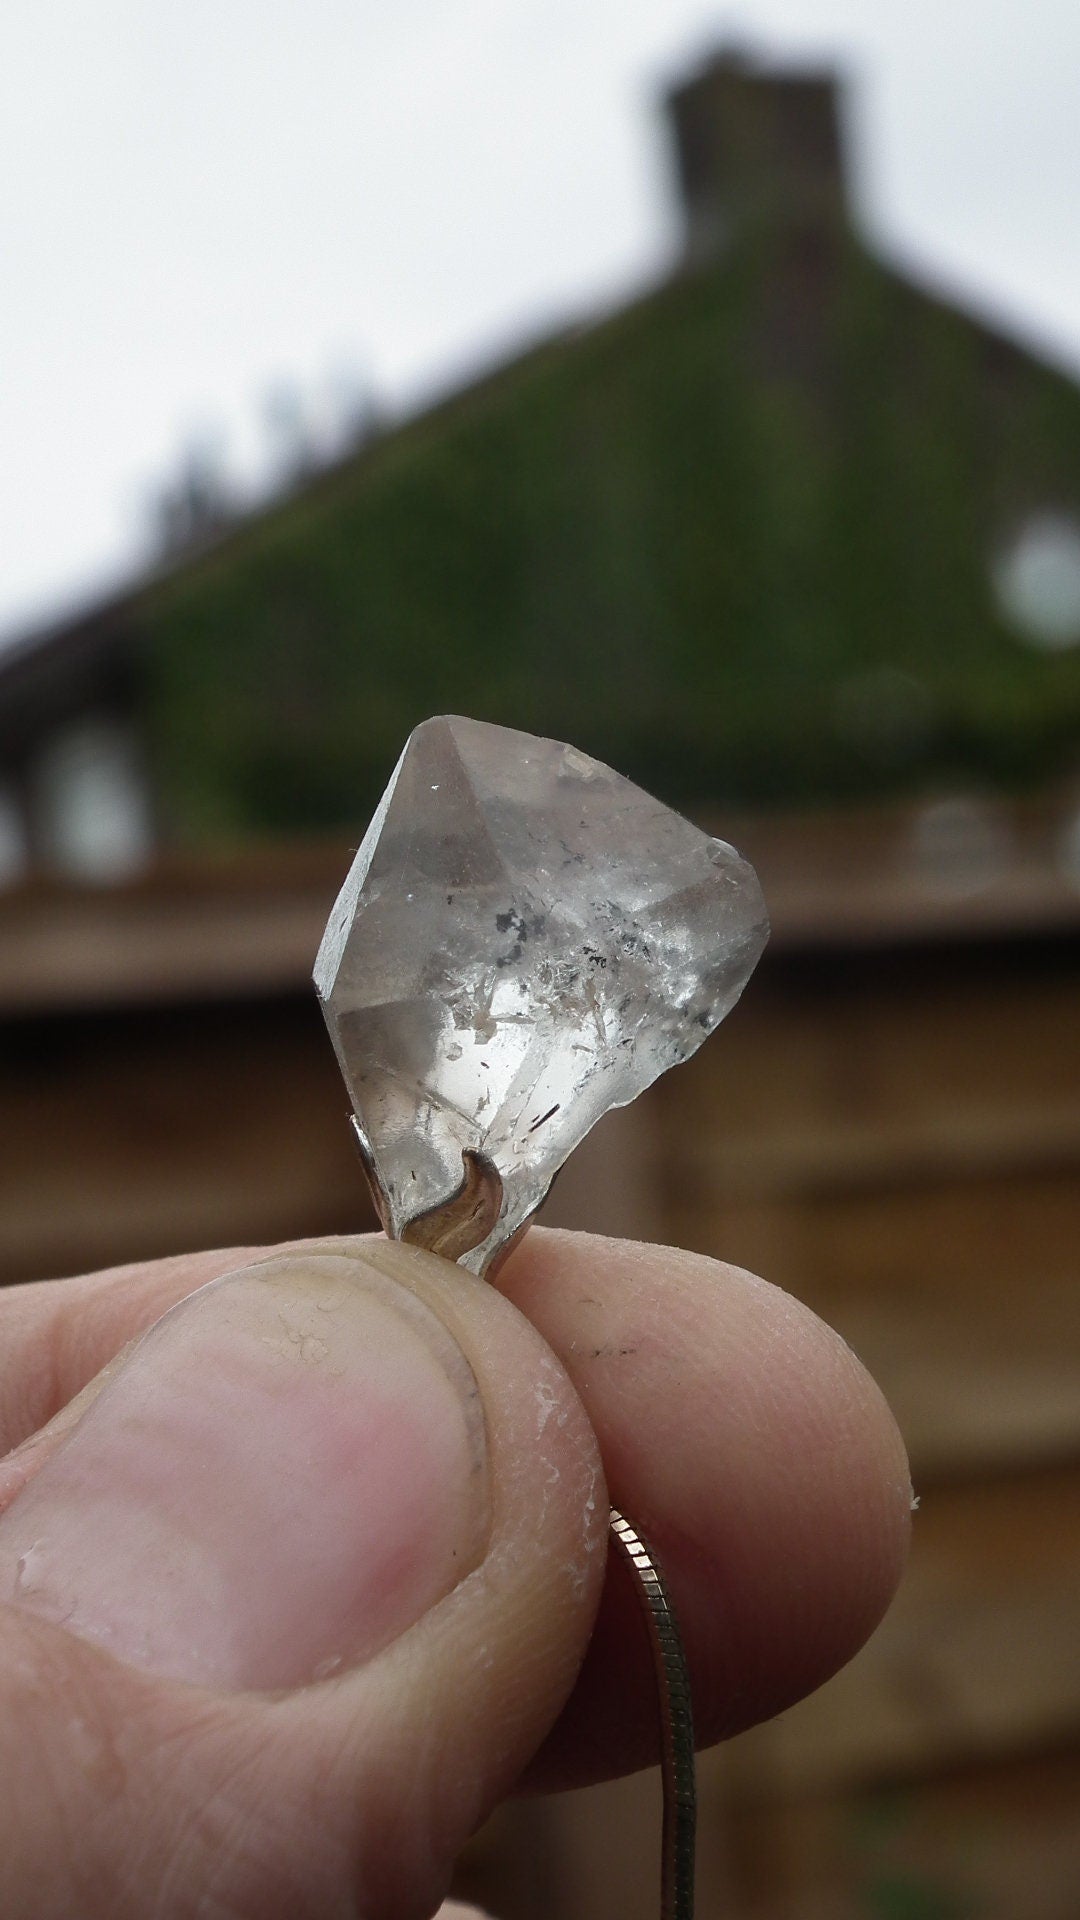 Herkimer diamond pendant